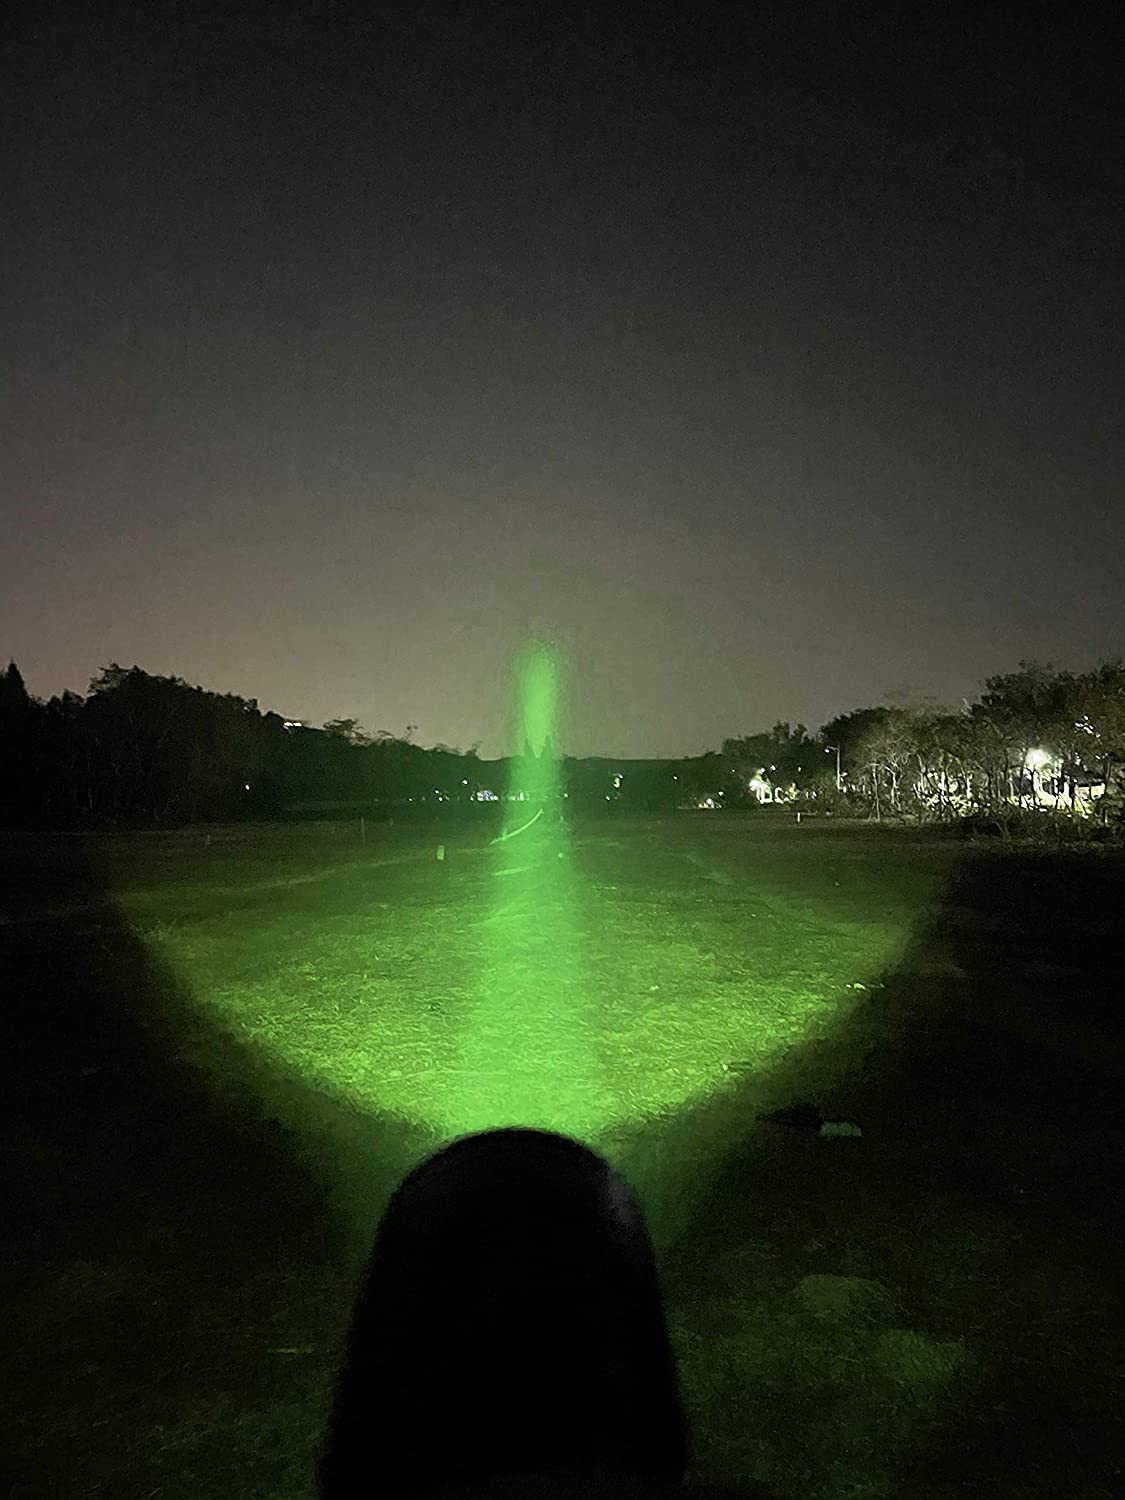 UltraFire GC20 1585 Yards Long Distance Green Hunting Flashlight